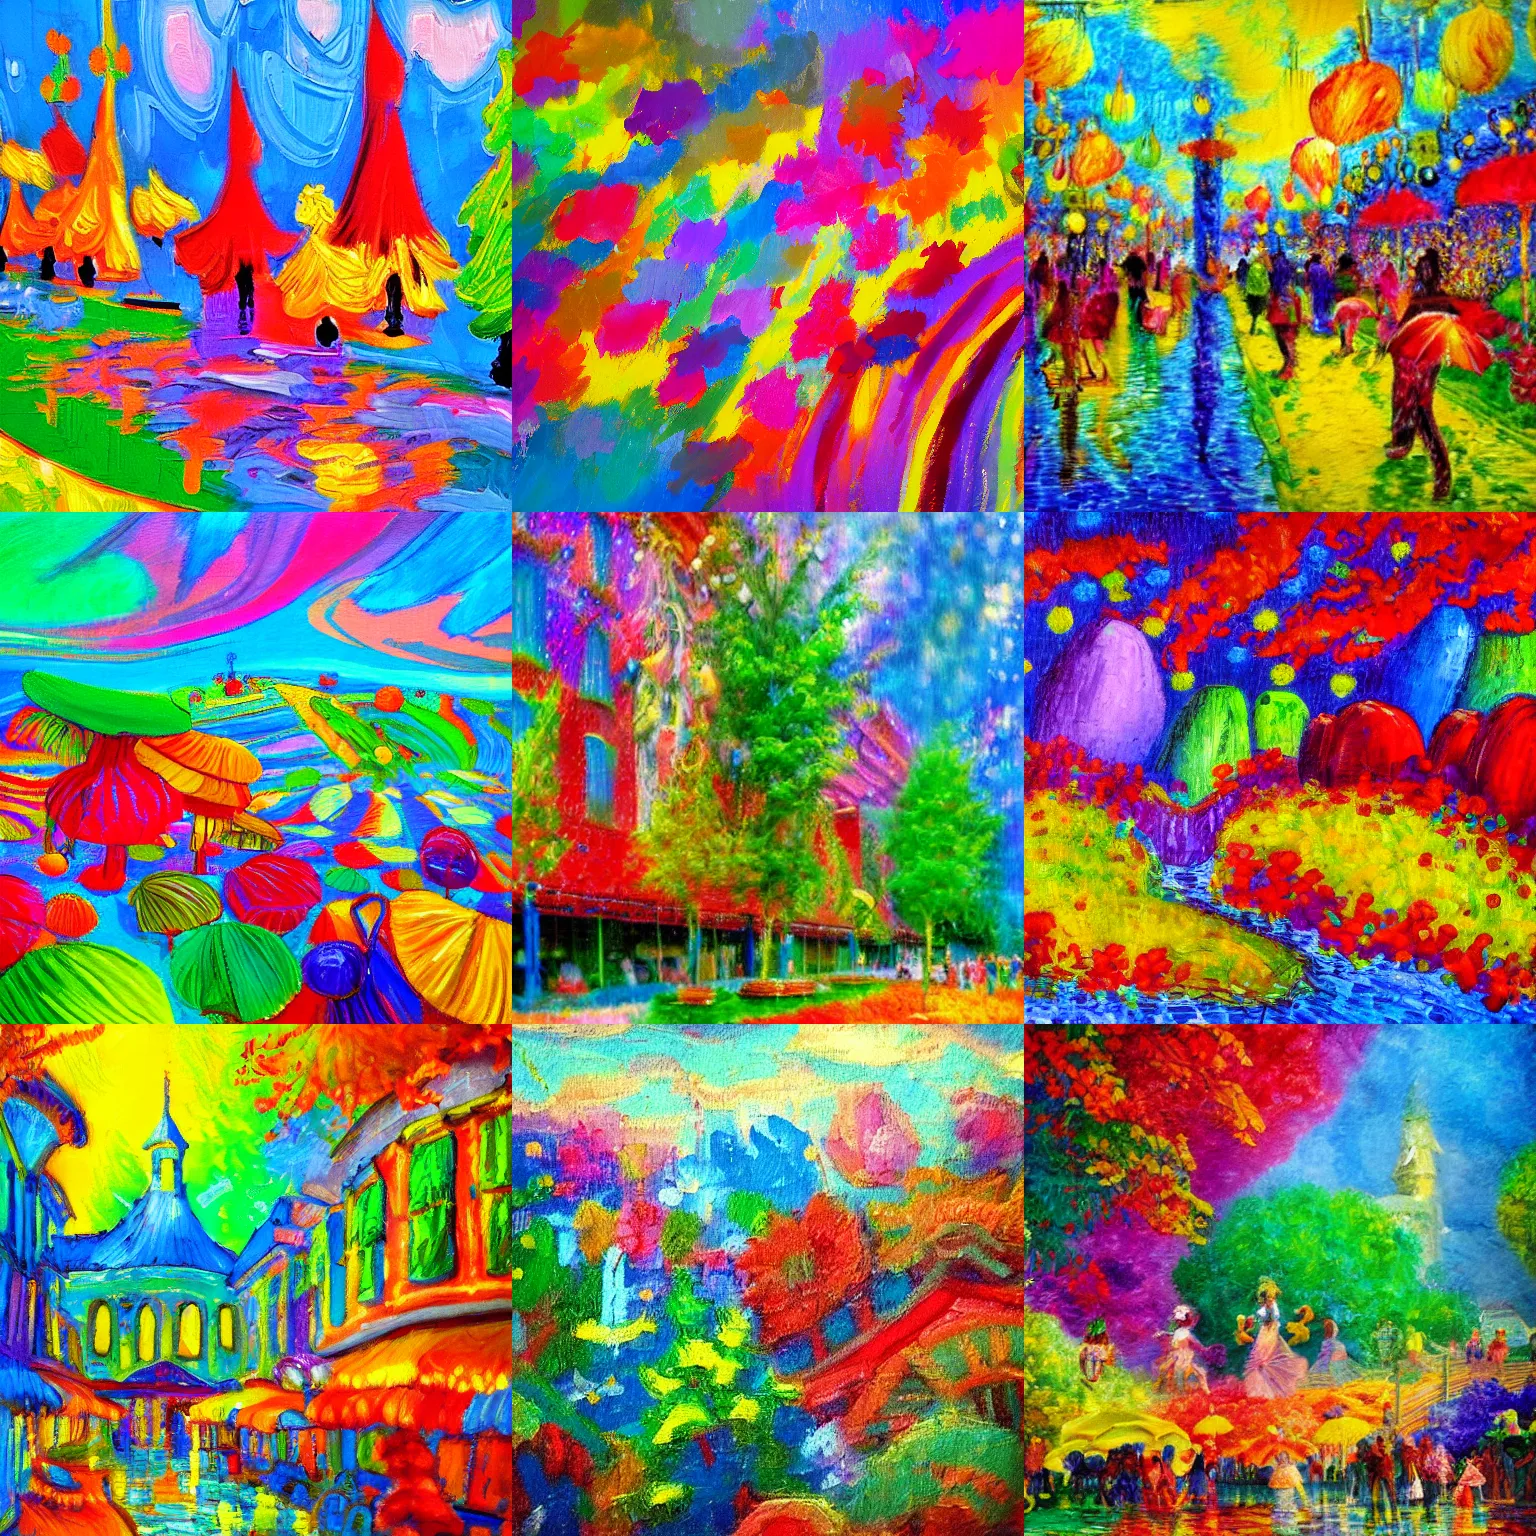 Prompt: impressionist painting of imaginationland, whimsical, joyful, colorful, vibrant